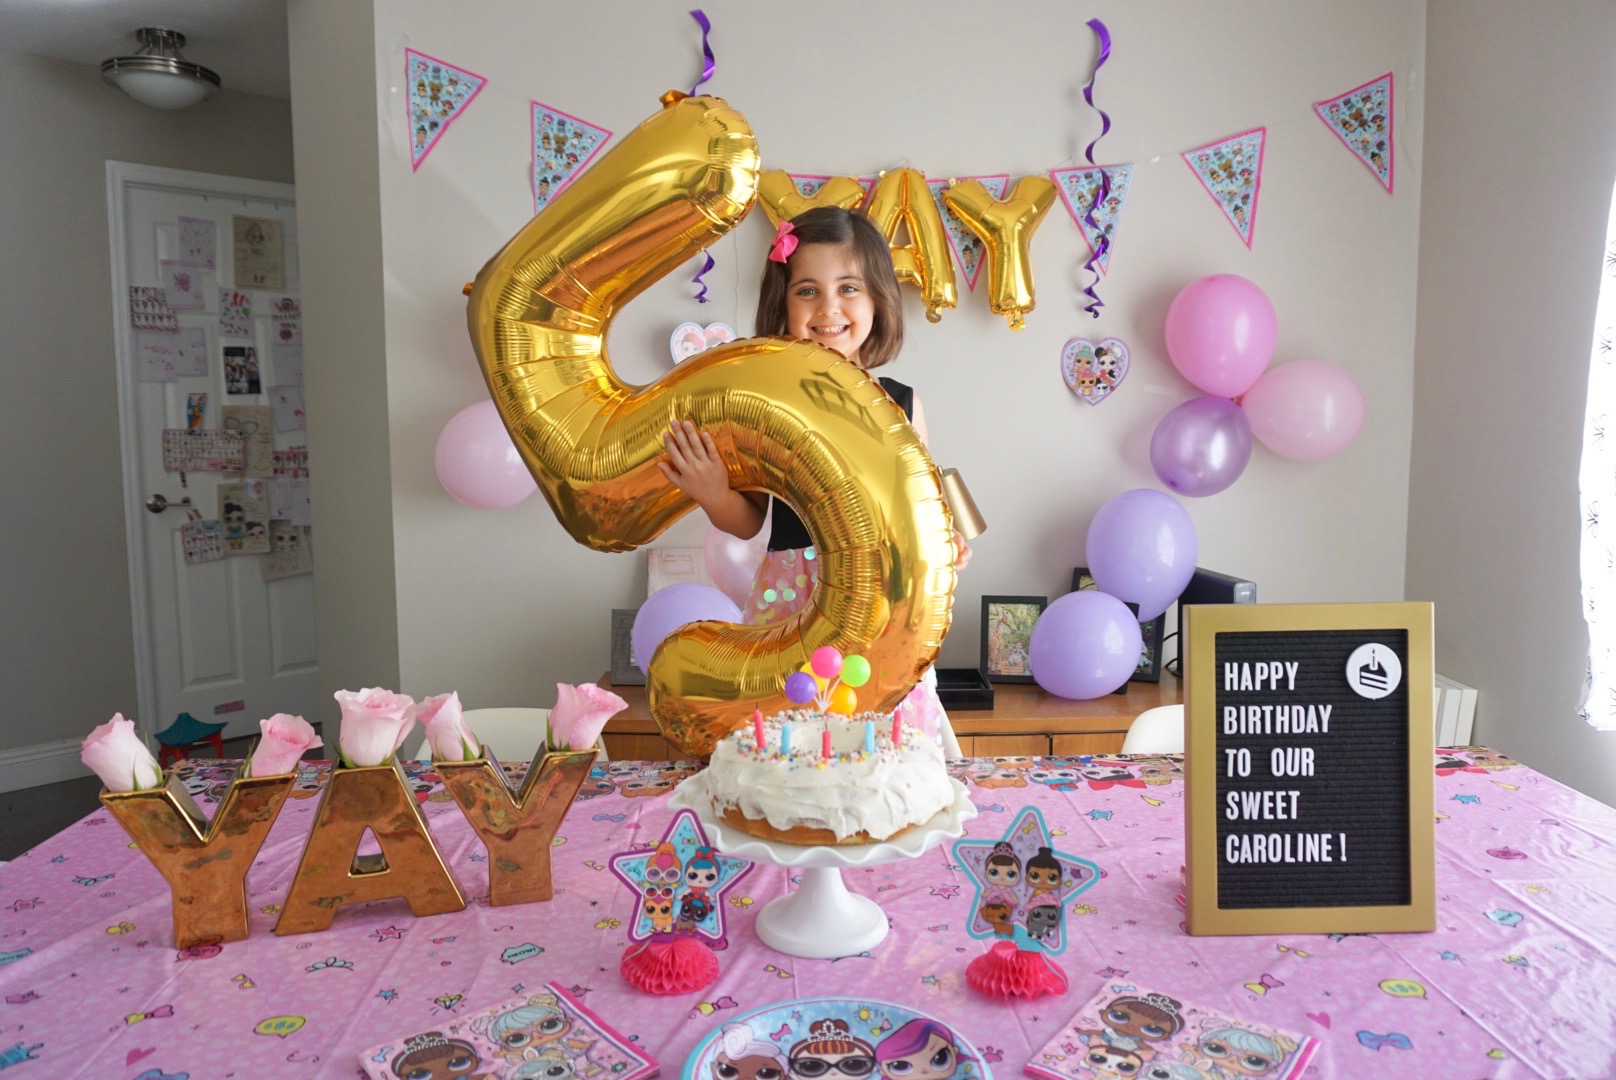 Celebrating Birthdays During Social Isolation: 4 Tips for Making it Special Miami Moms Blog Becky Salgado Contributor